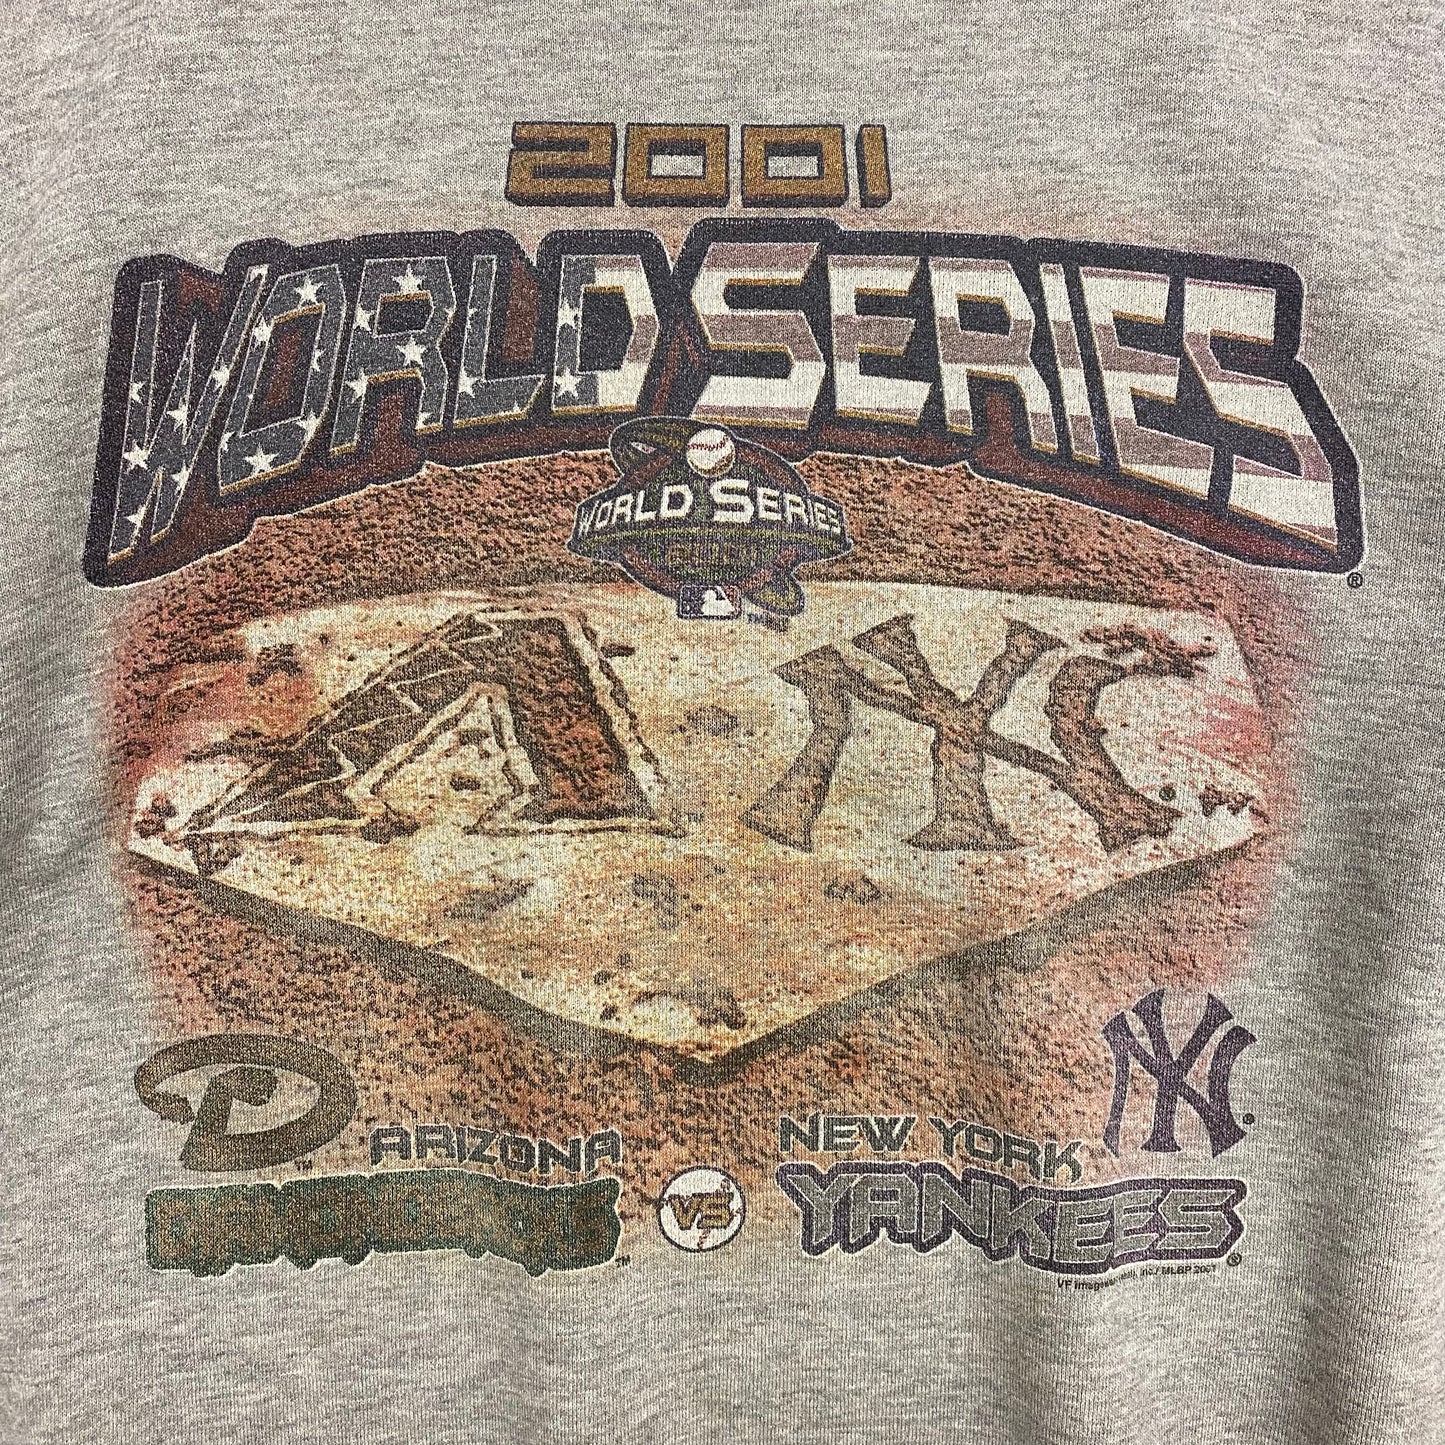 2001 MLB World Series: Arizona Diamondbacks vs. NY Yankees Sweatshirt - Size XL